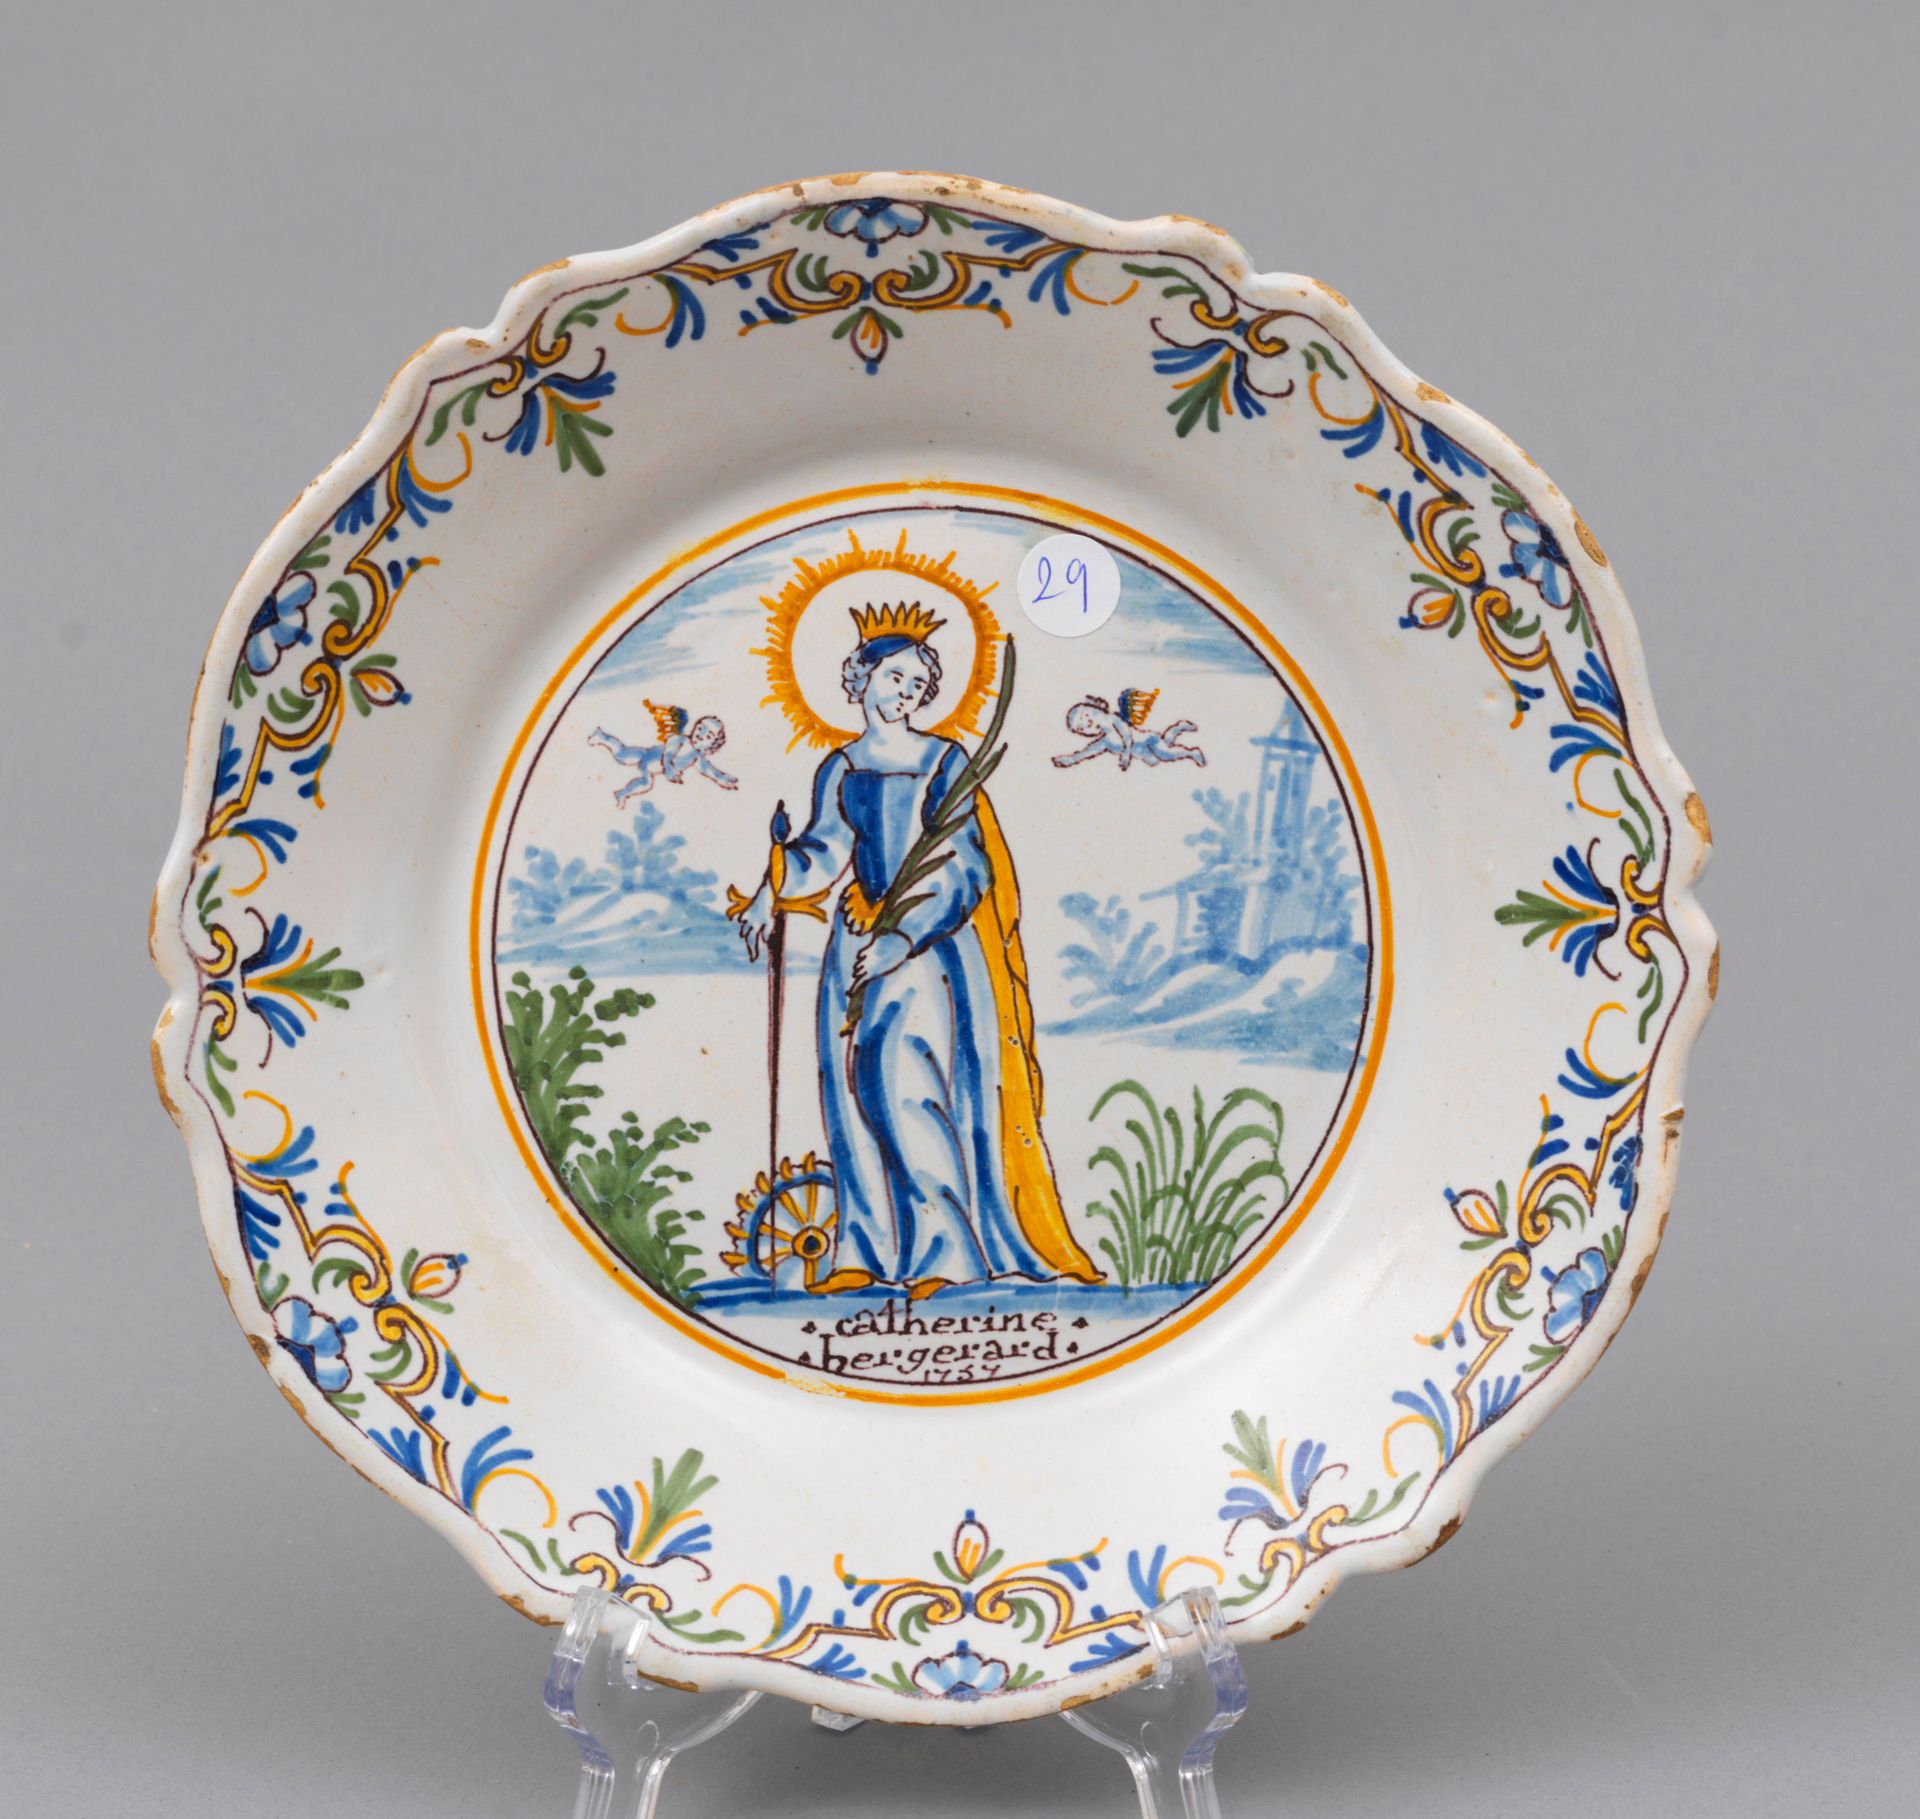 Faience Nevers 
内韦尔

陶器盘子，边缘有轮廓，中间有多色装饰，是一个站立的圣凯瑟琳的徽章，周围有两个小天使和一个小男孩。

底部刻有".Cat&hellip;